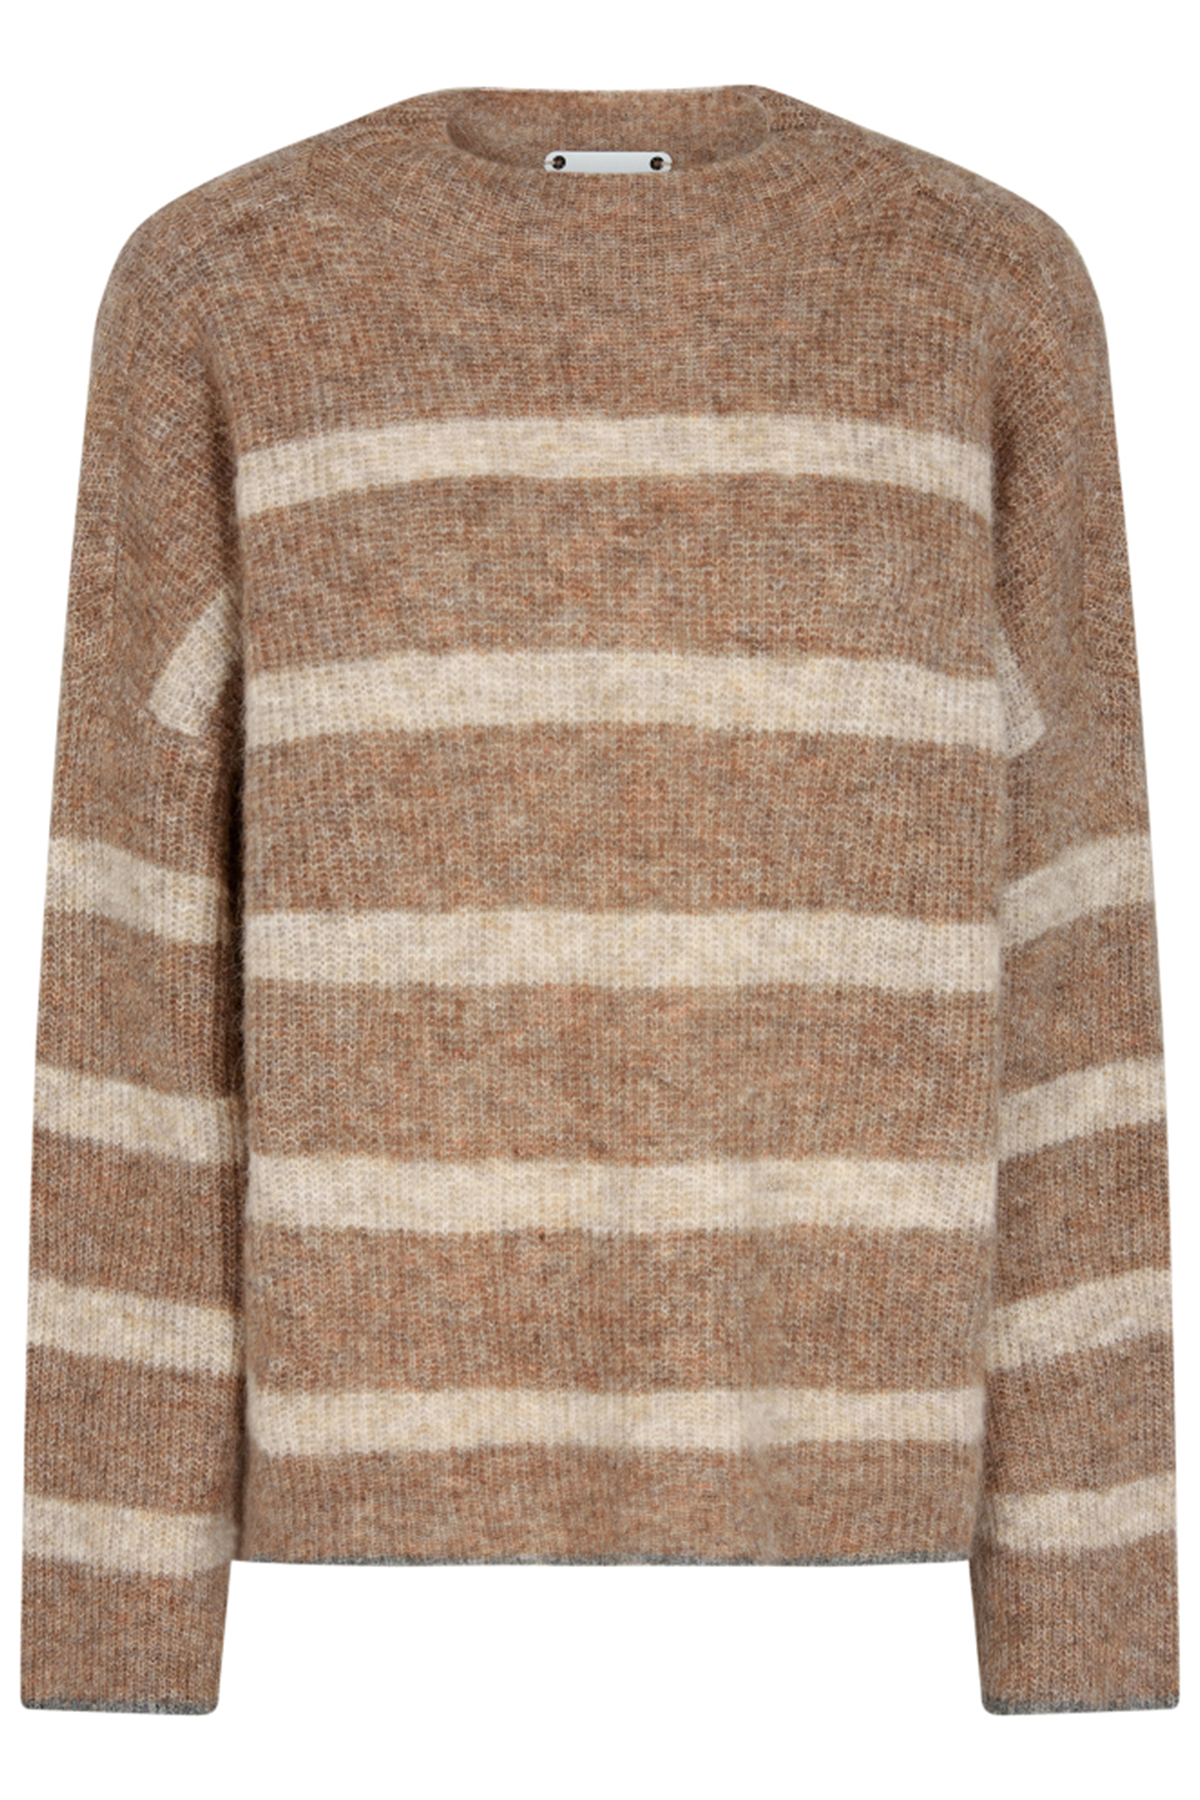 CoÂ´Couture Cozycc Stripe Turtleneck Pullover, Farve: Beige, Størrelse: XL, Dame